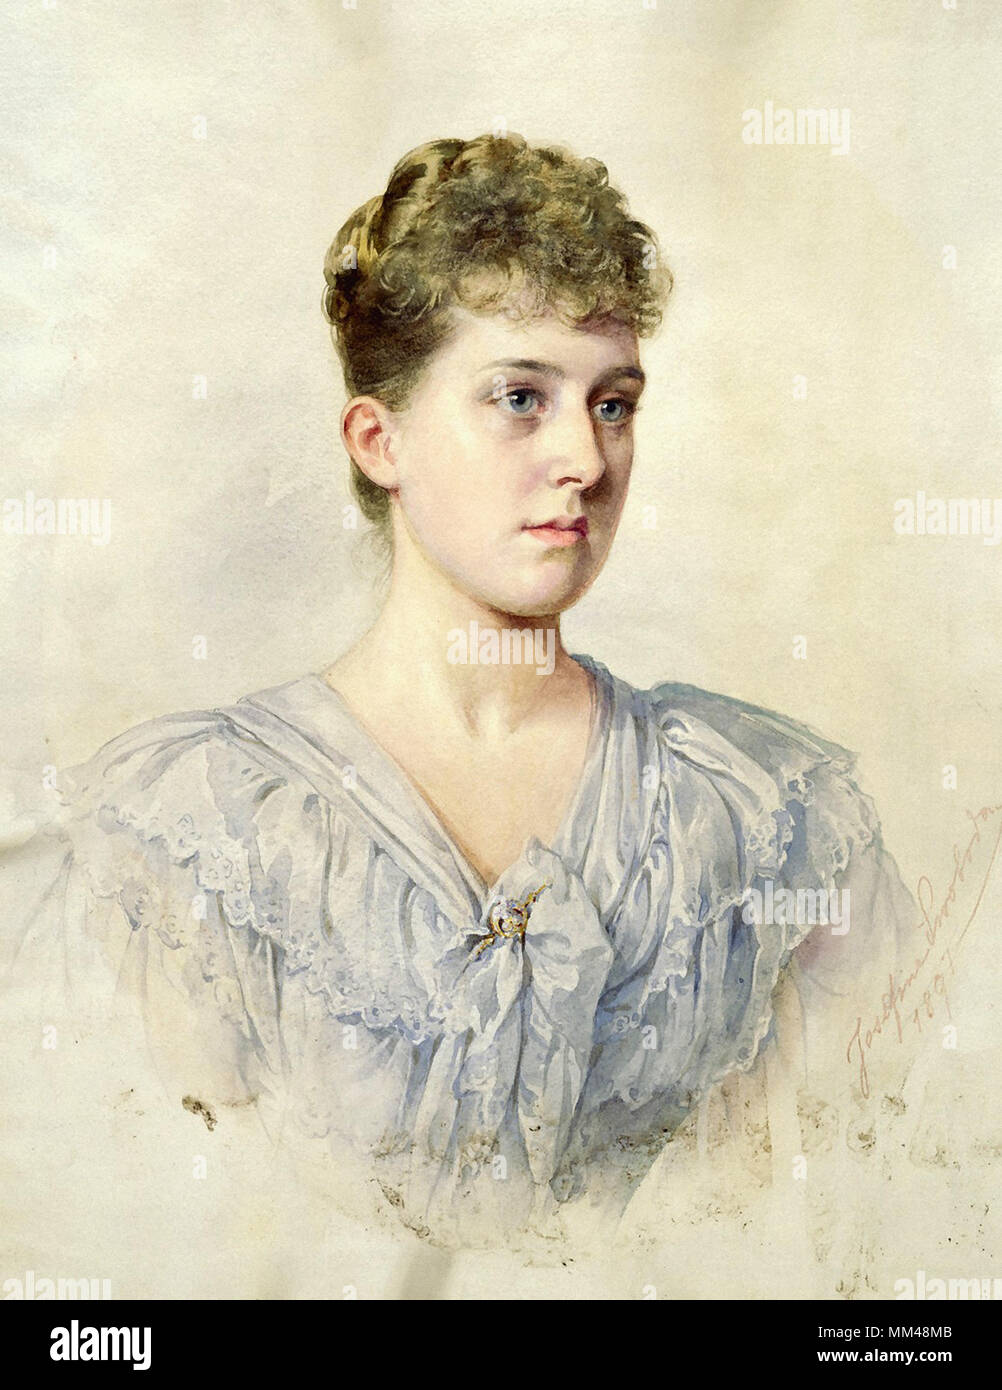 Swoboda Josefine - La princesa Marie Louise de Schleswig-Holstein Foto de stock